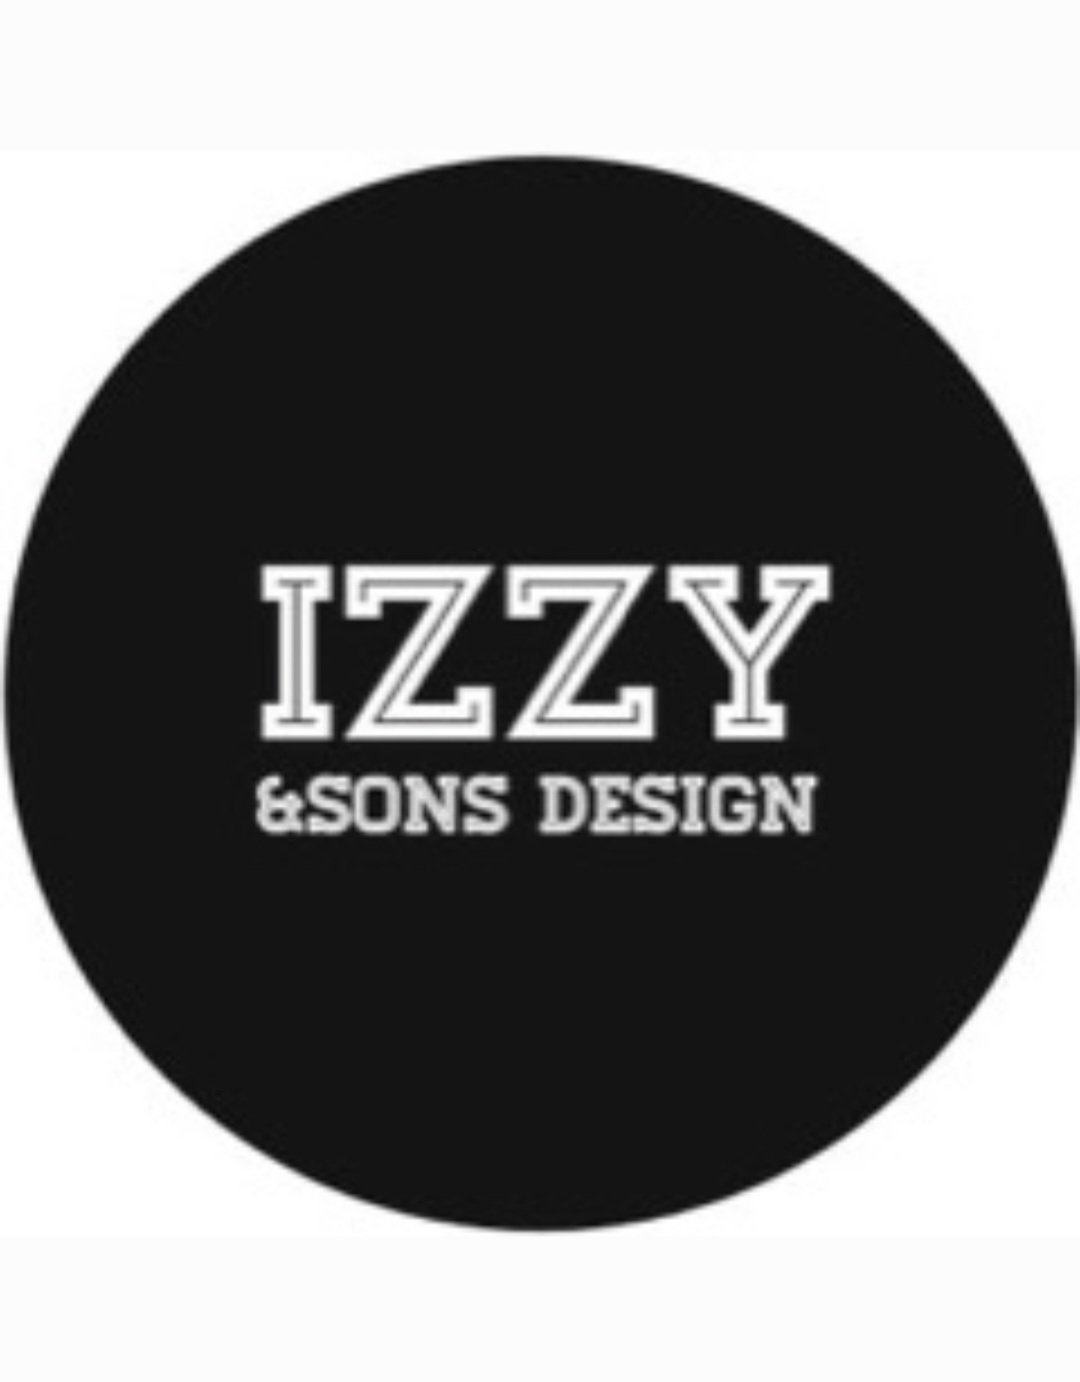 Izzy & Sons Design, LLC Logo